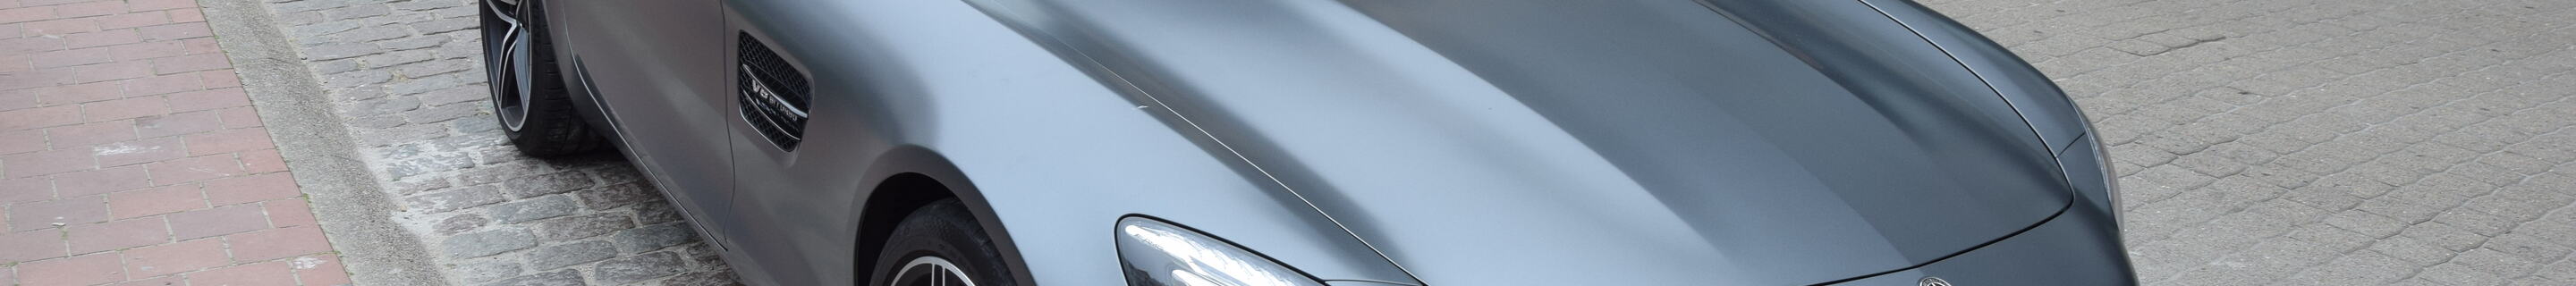 Mercedes-AMG GT Roadster R190